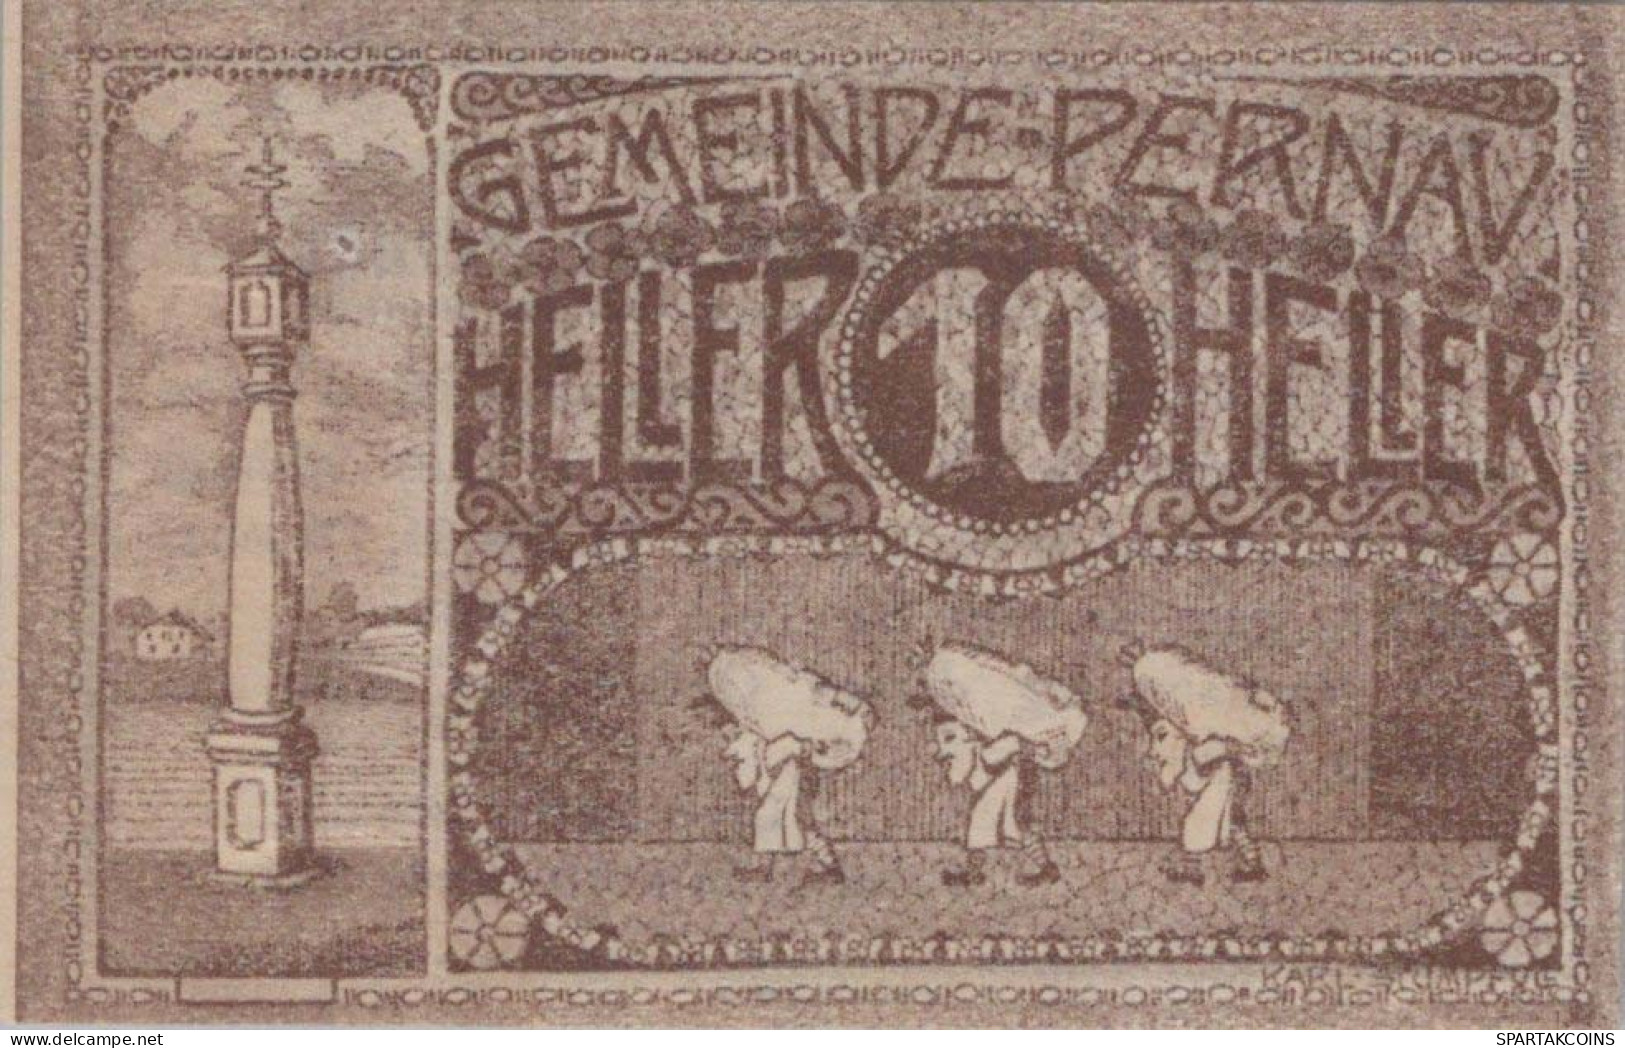 10 HELLER 1920 Stadt PERNAU Oberösterreich Österreich Notgeld Banknote #PE333 - [11] Lokale Uitgaven